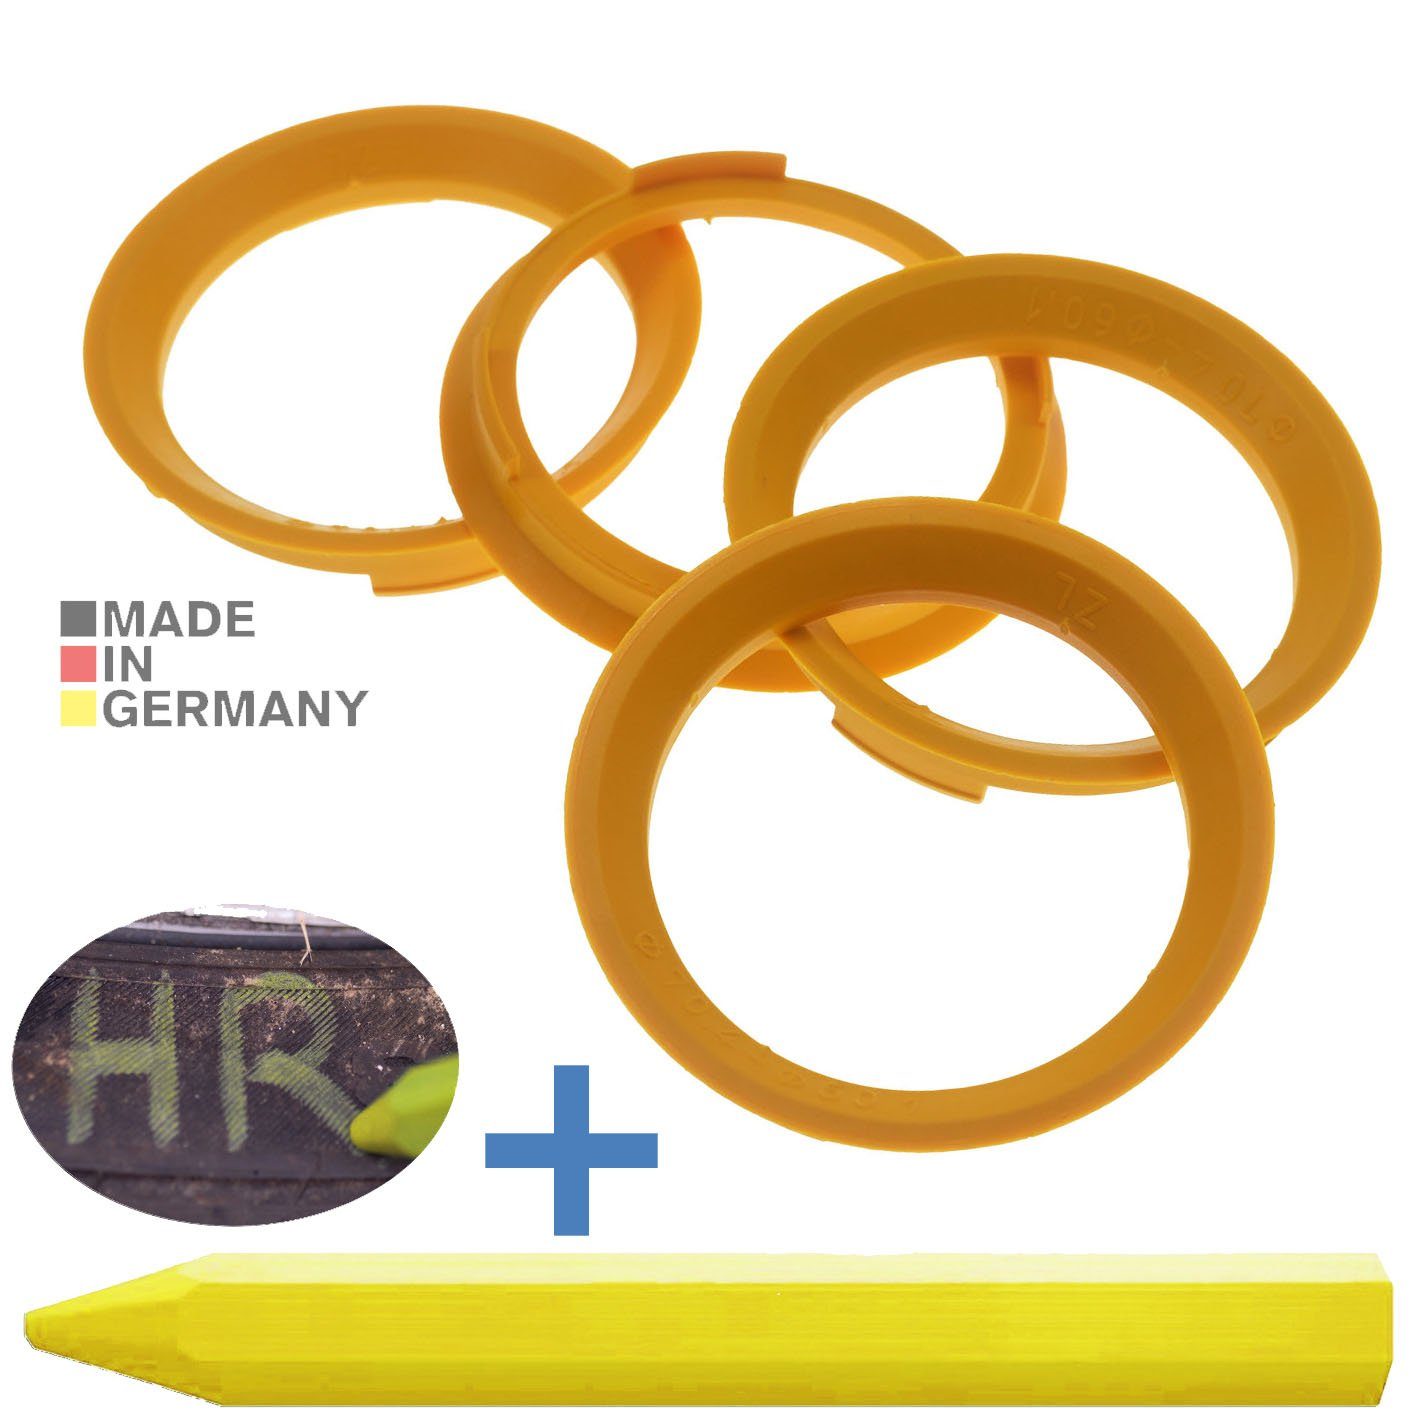 RKC Reifenstift 4X Zentrierringe Gelb Felgen Ringe + 1x Reifen Kreide Fett Stift, Maße: 70,4 x 60,1 mm